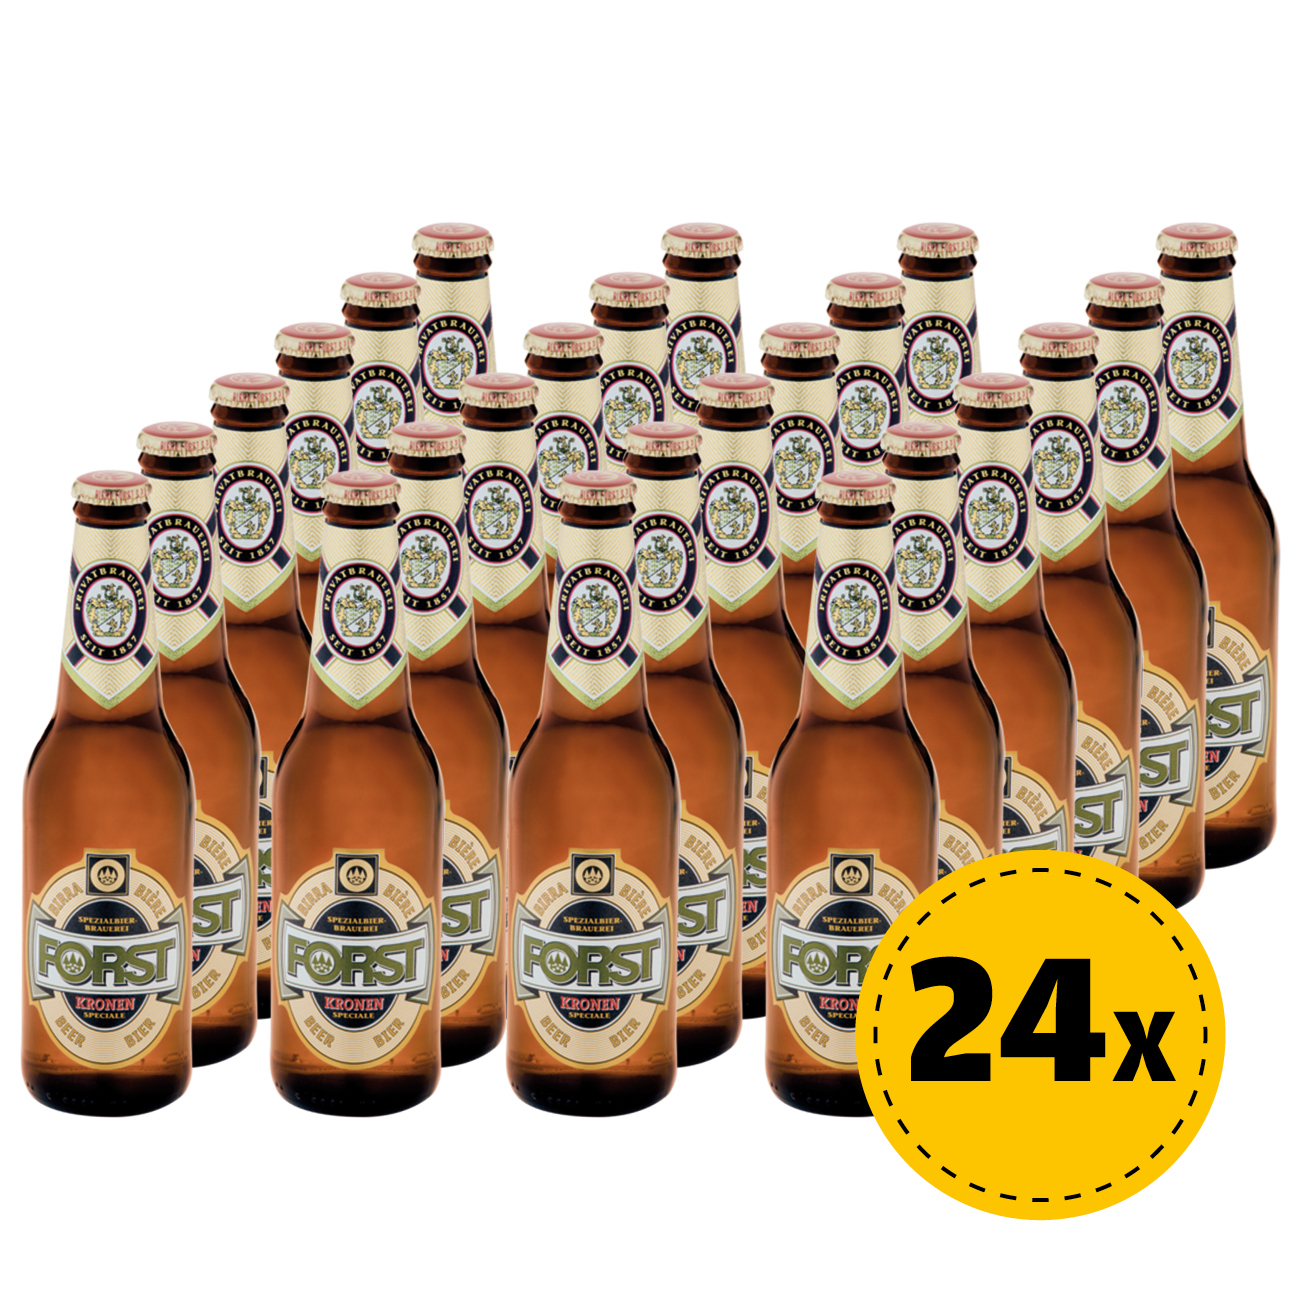 24x Forst Kronen Bier